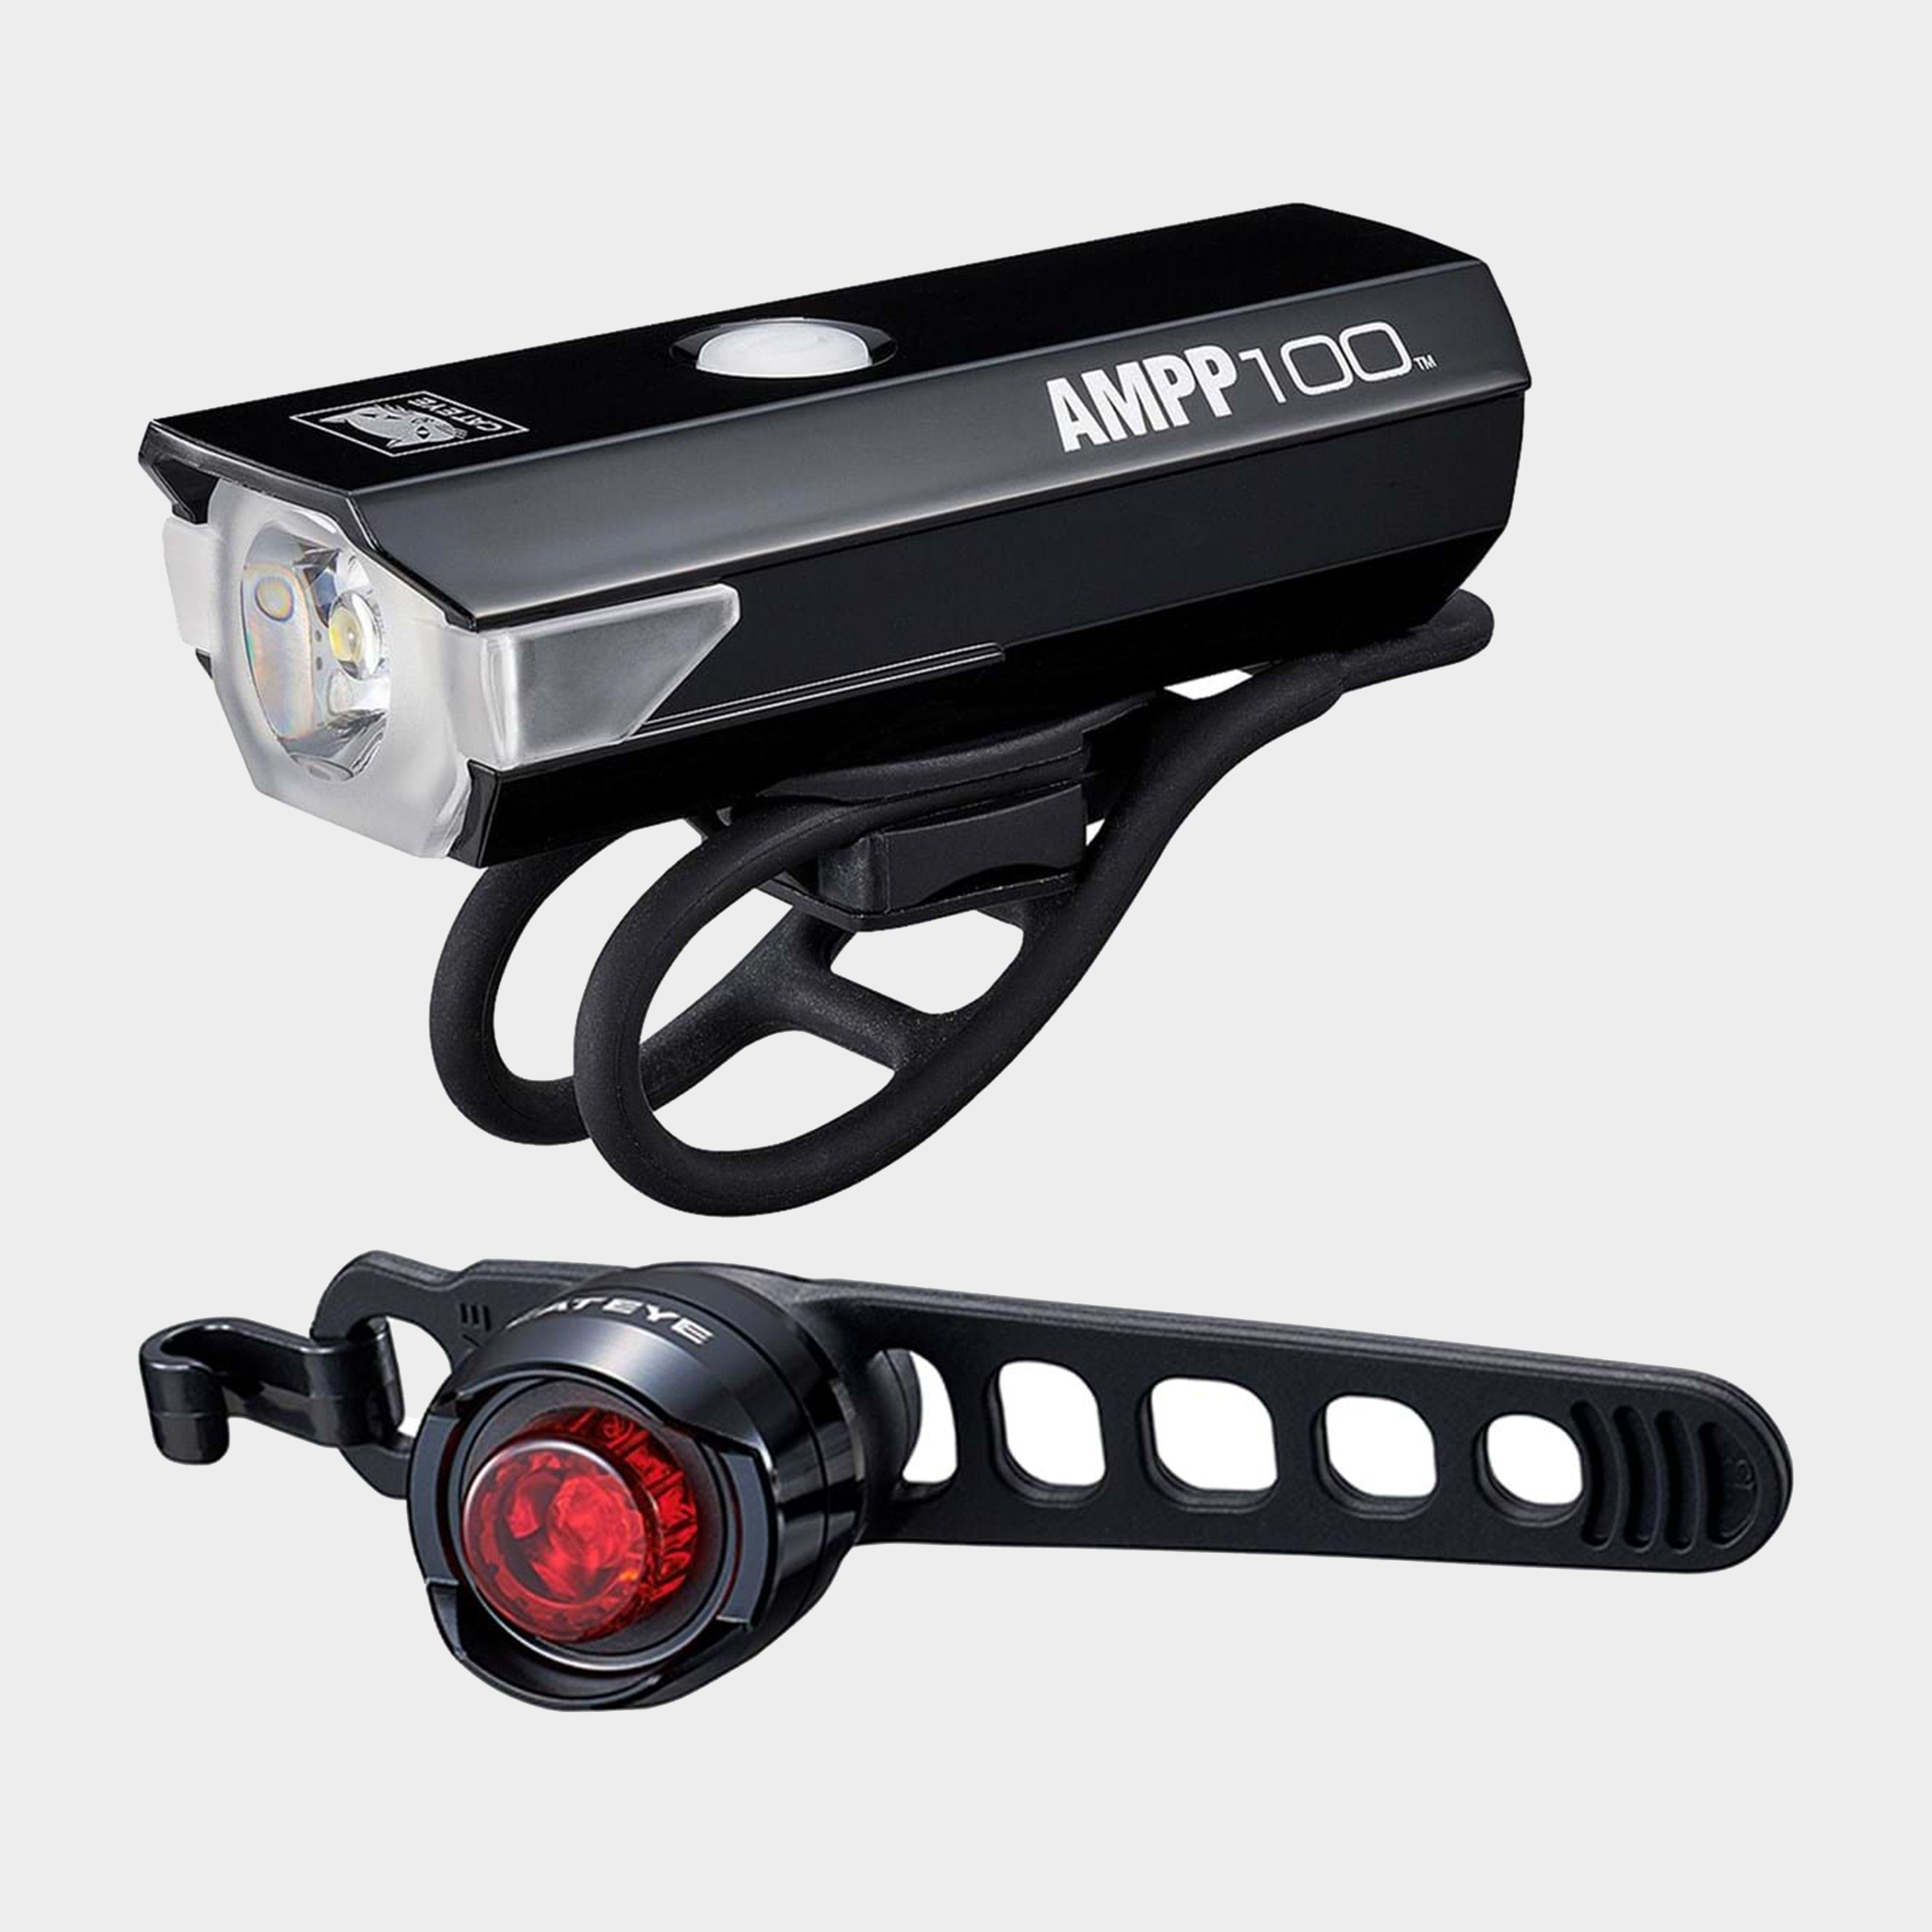  Cateye AMPP 200 & ORB RC Bike Light Set, Black